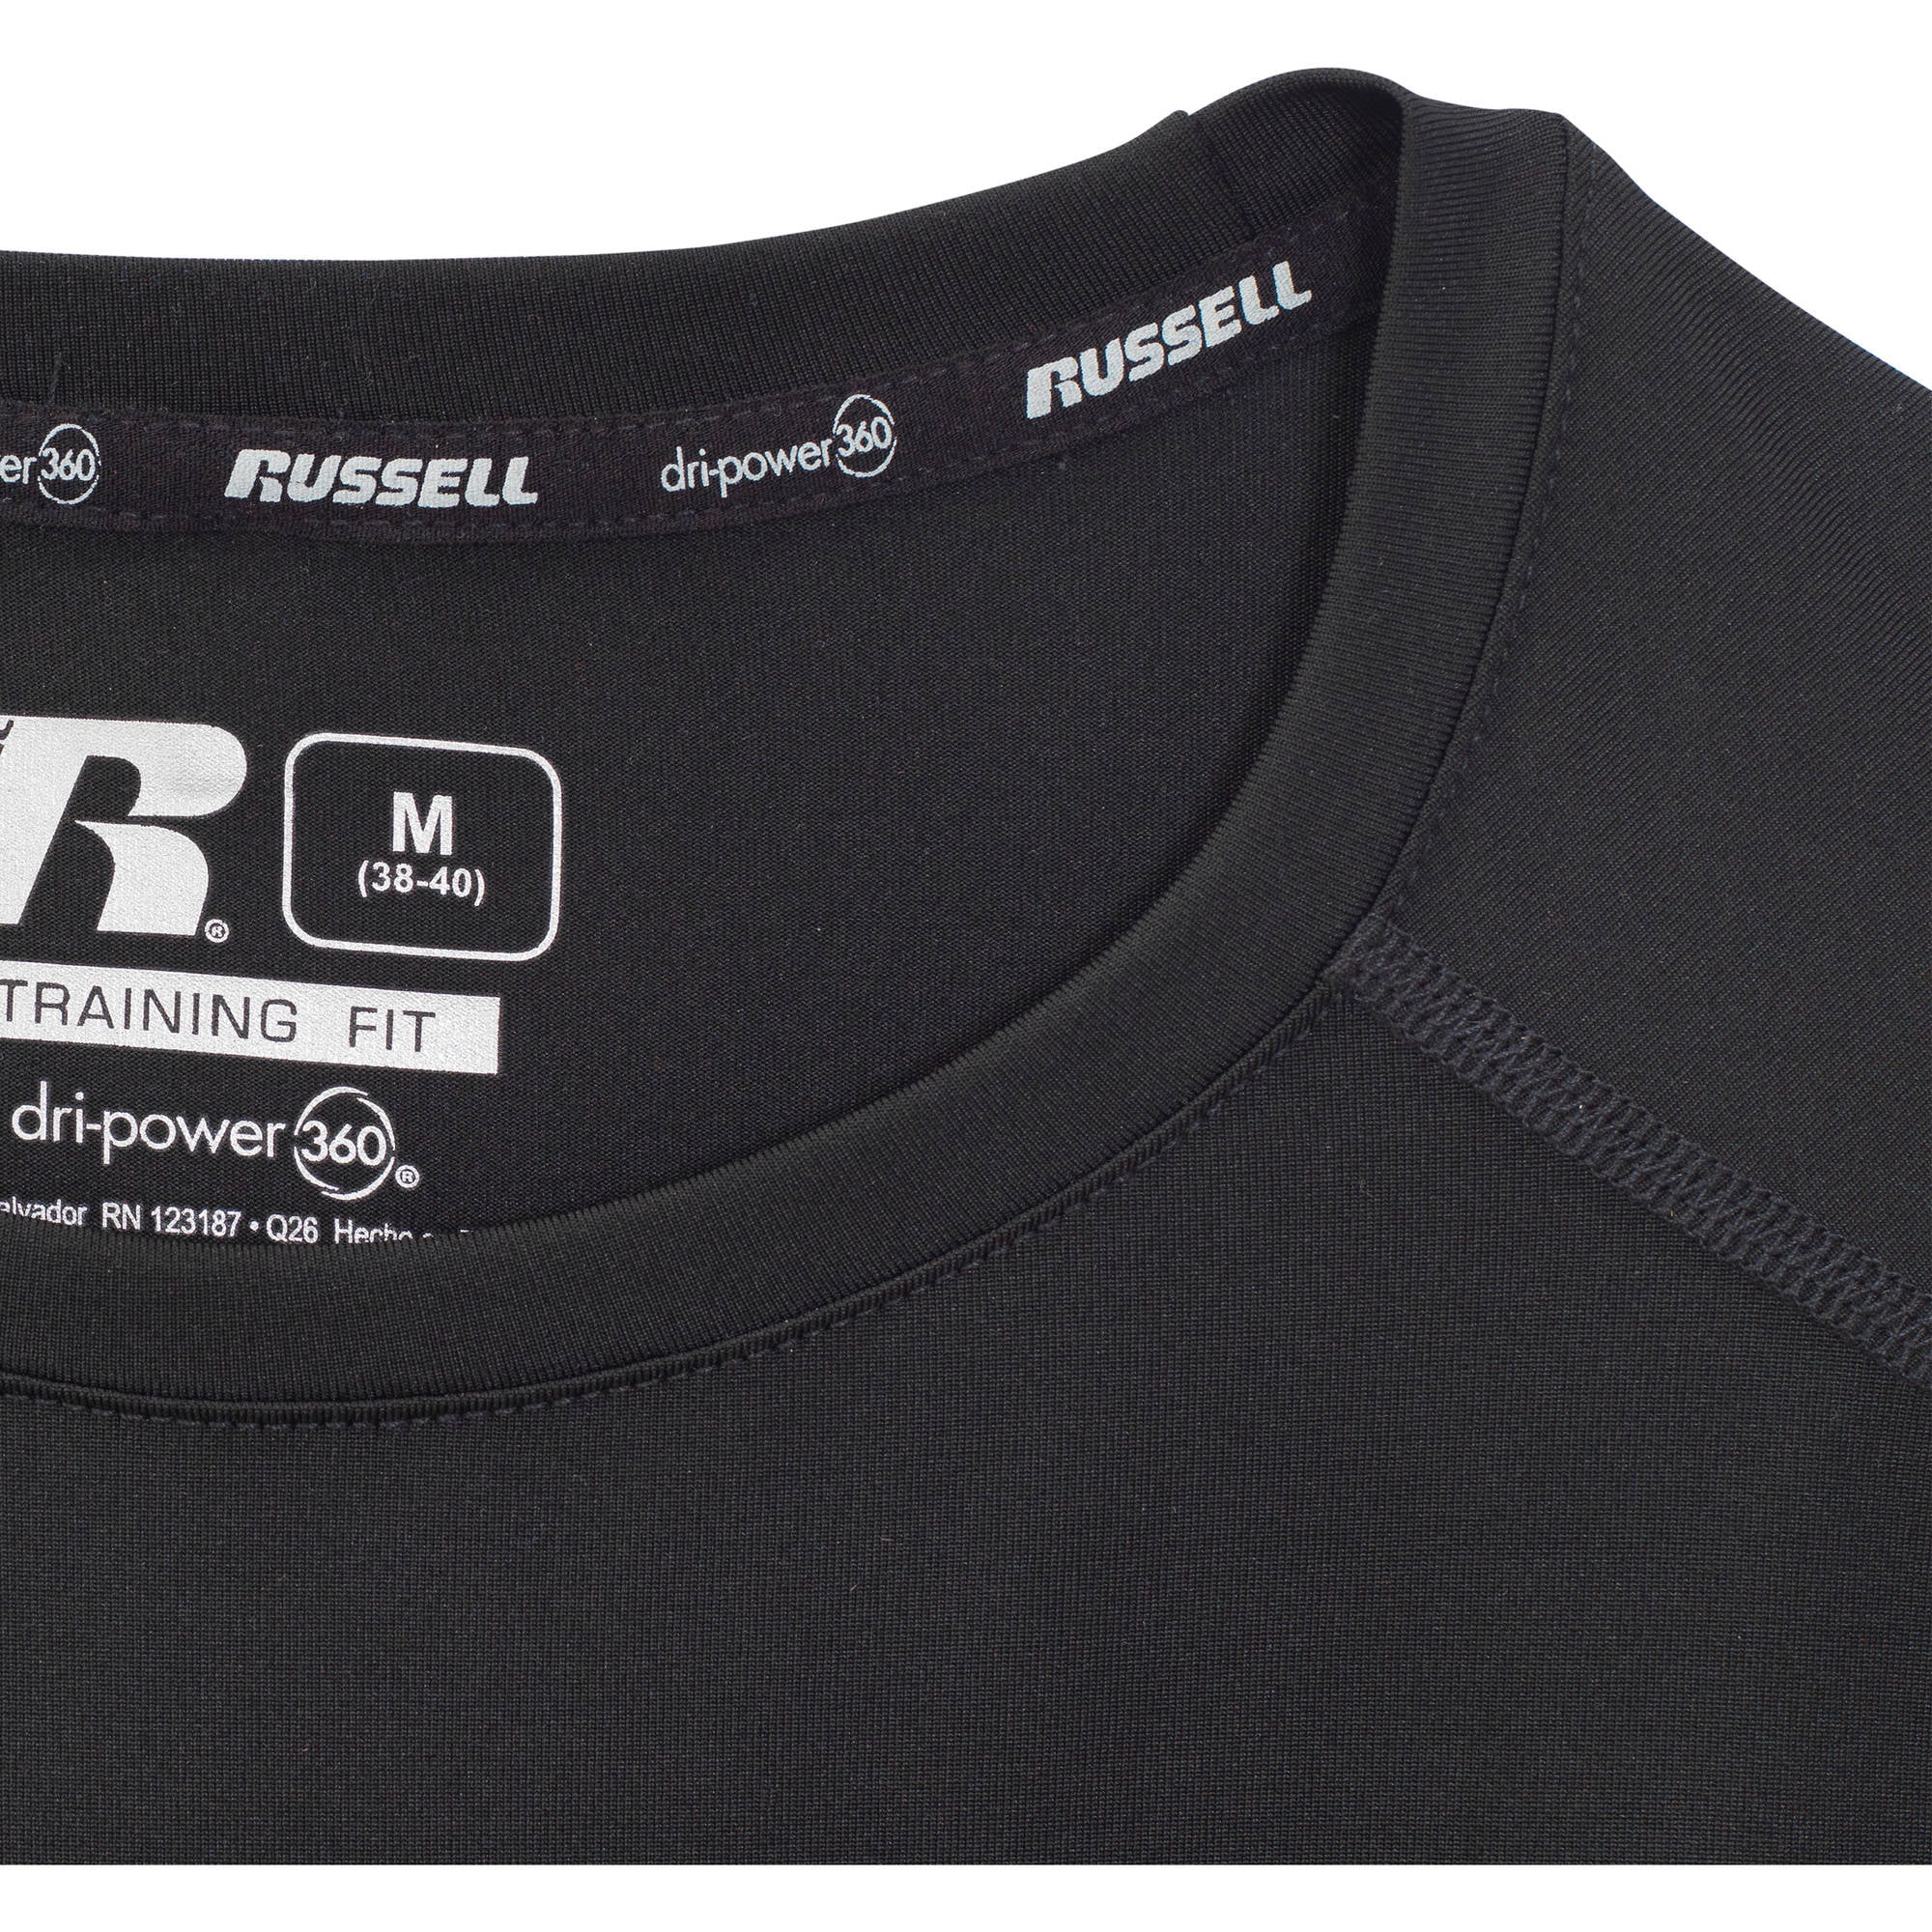 russell dri power 360 training fit shirt